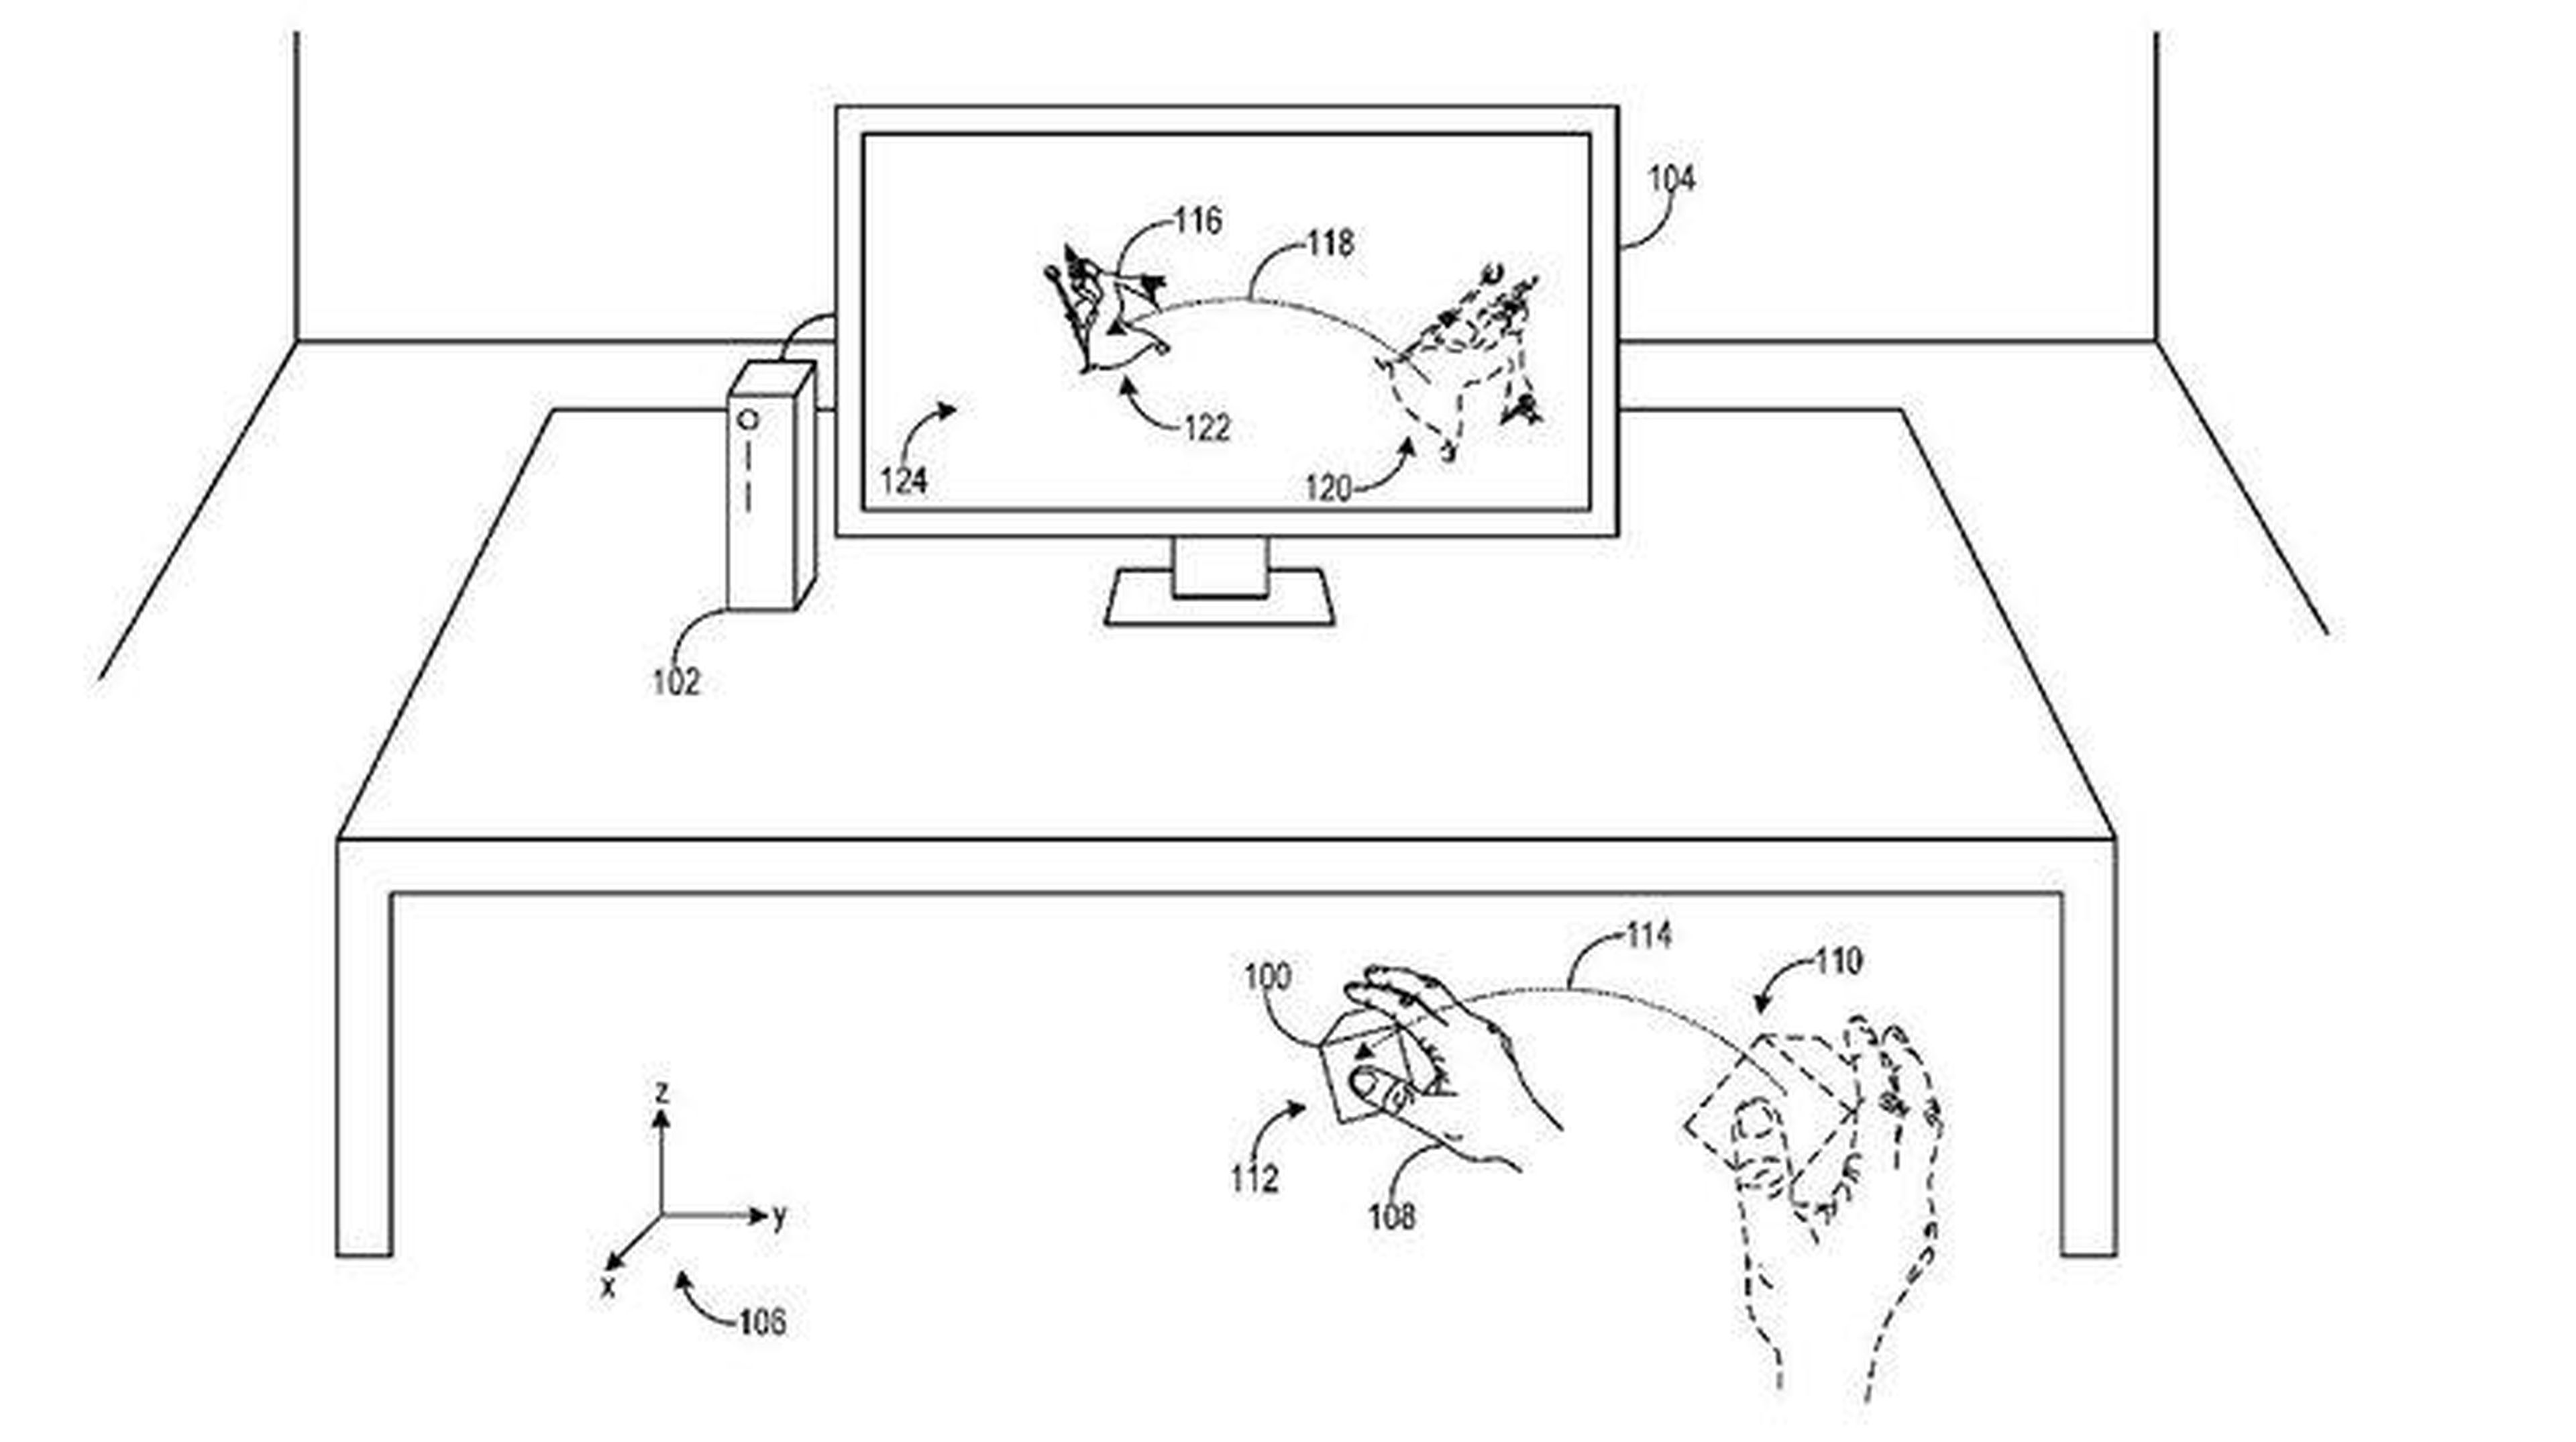 Microsoft Patente - Dispositivo que rota